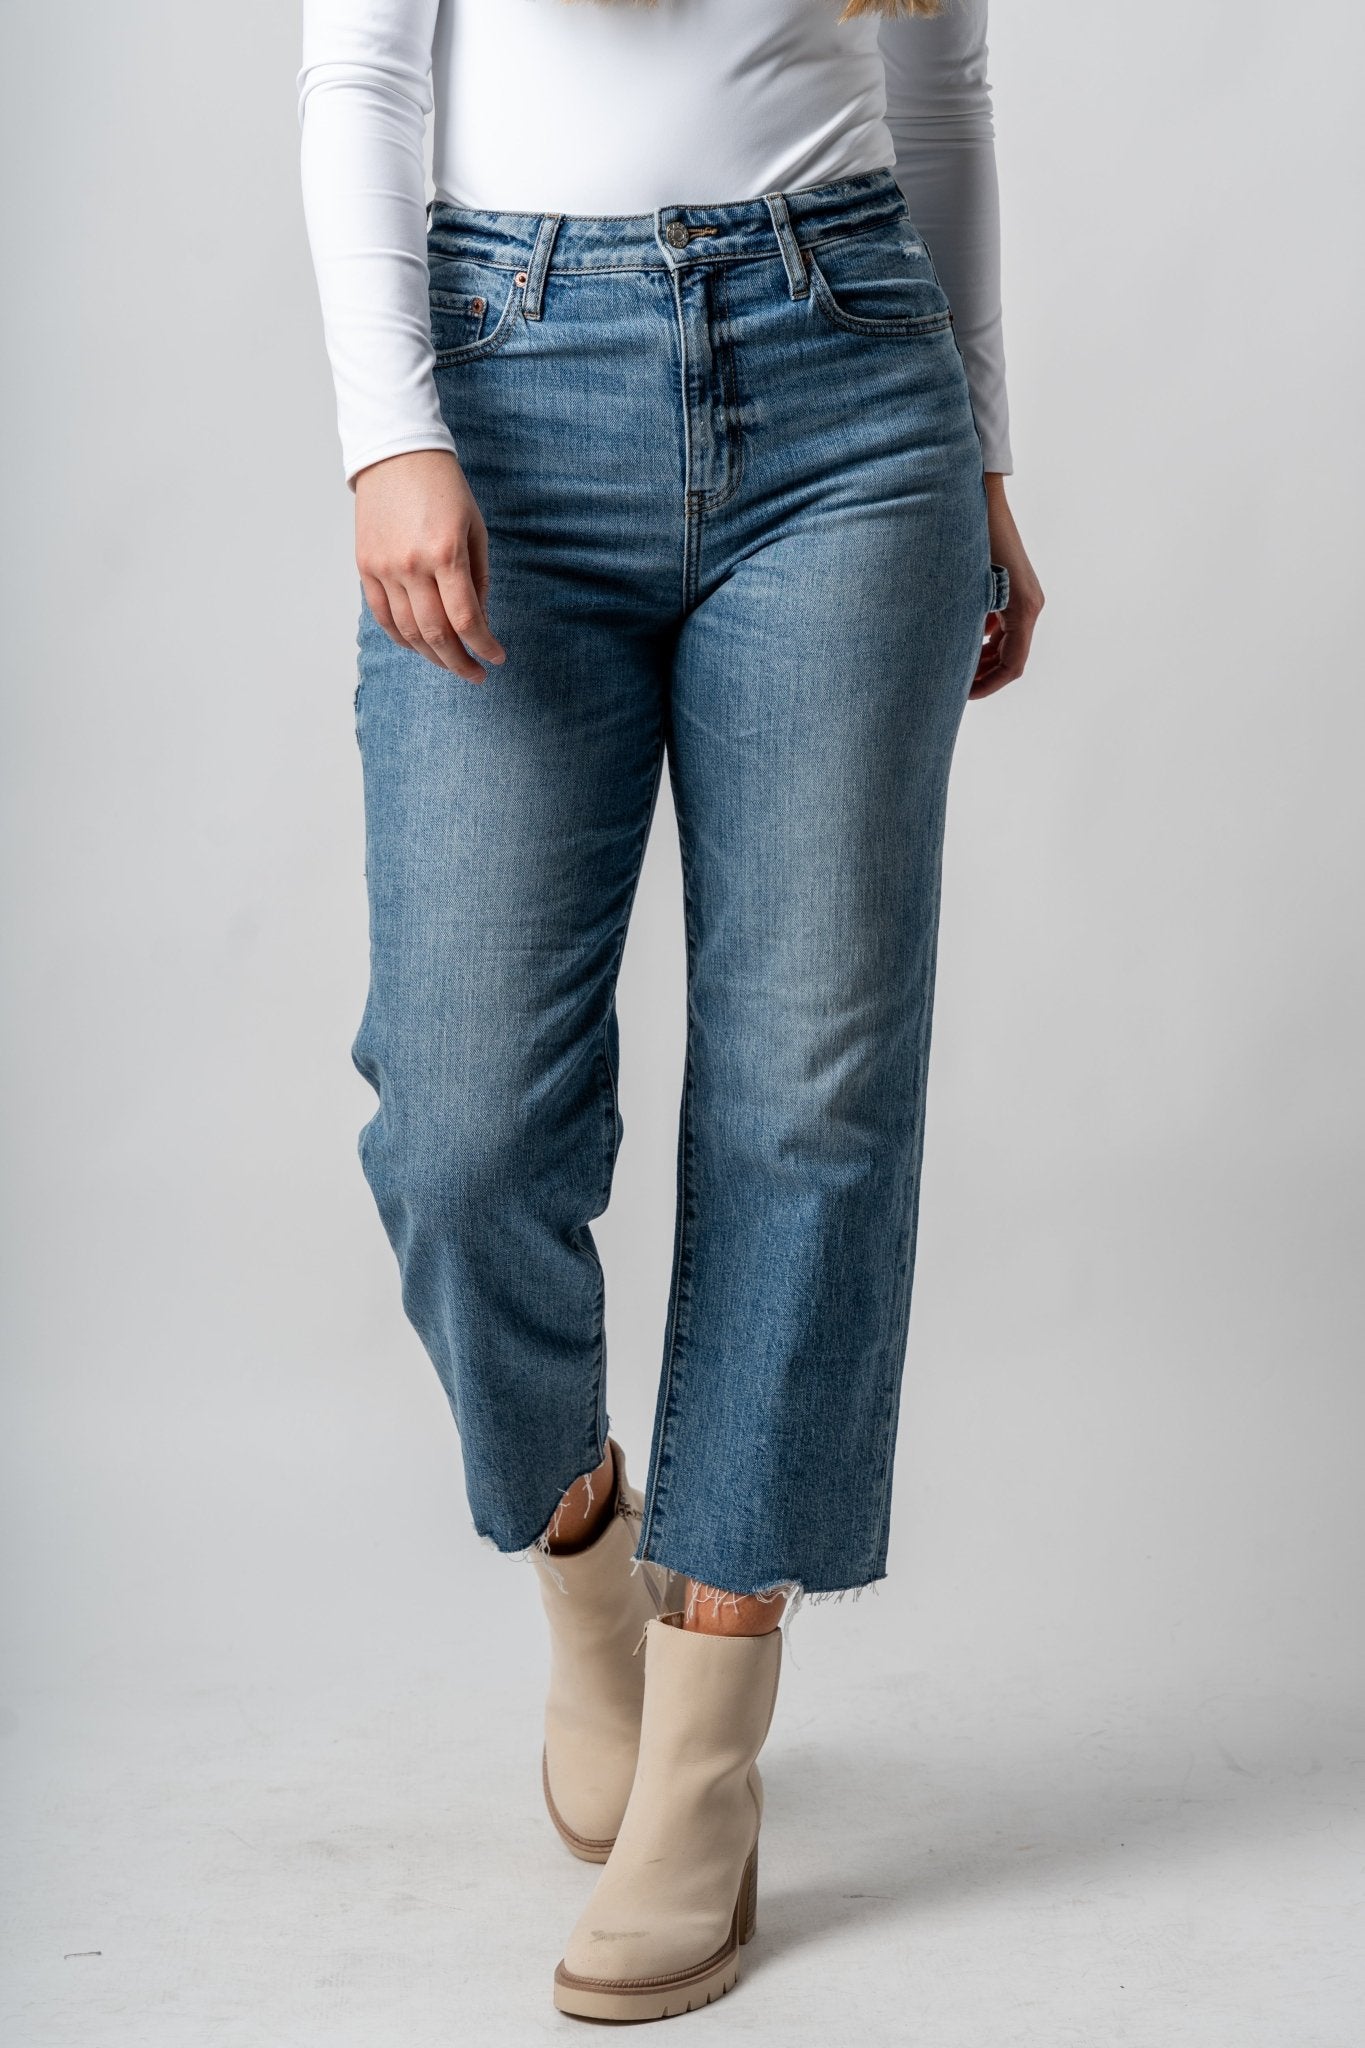 Daze utility high rise crop jeans shut down | Lush Fashion Lounge: boutique women's jeans, fashion jeans for women, affordable fashion jeans, cute boutique jeans